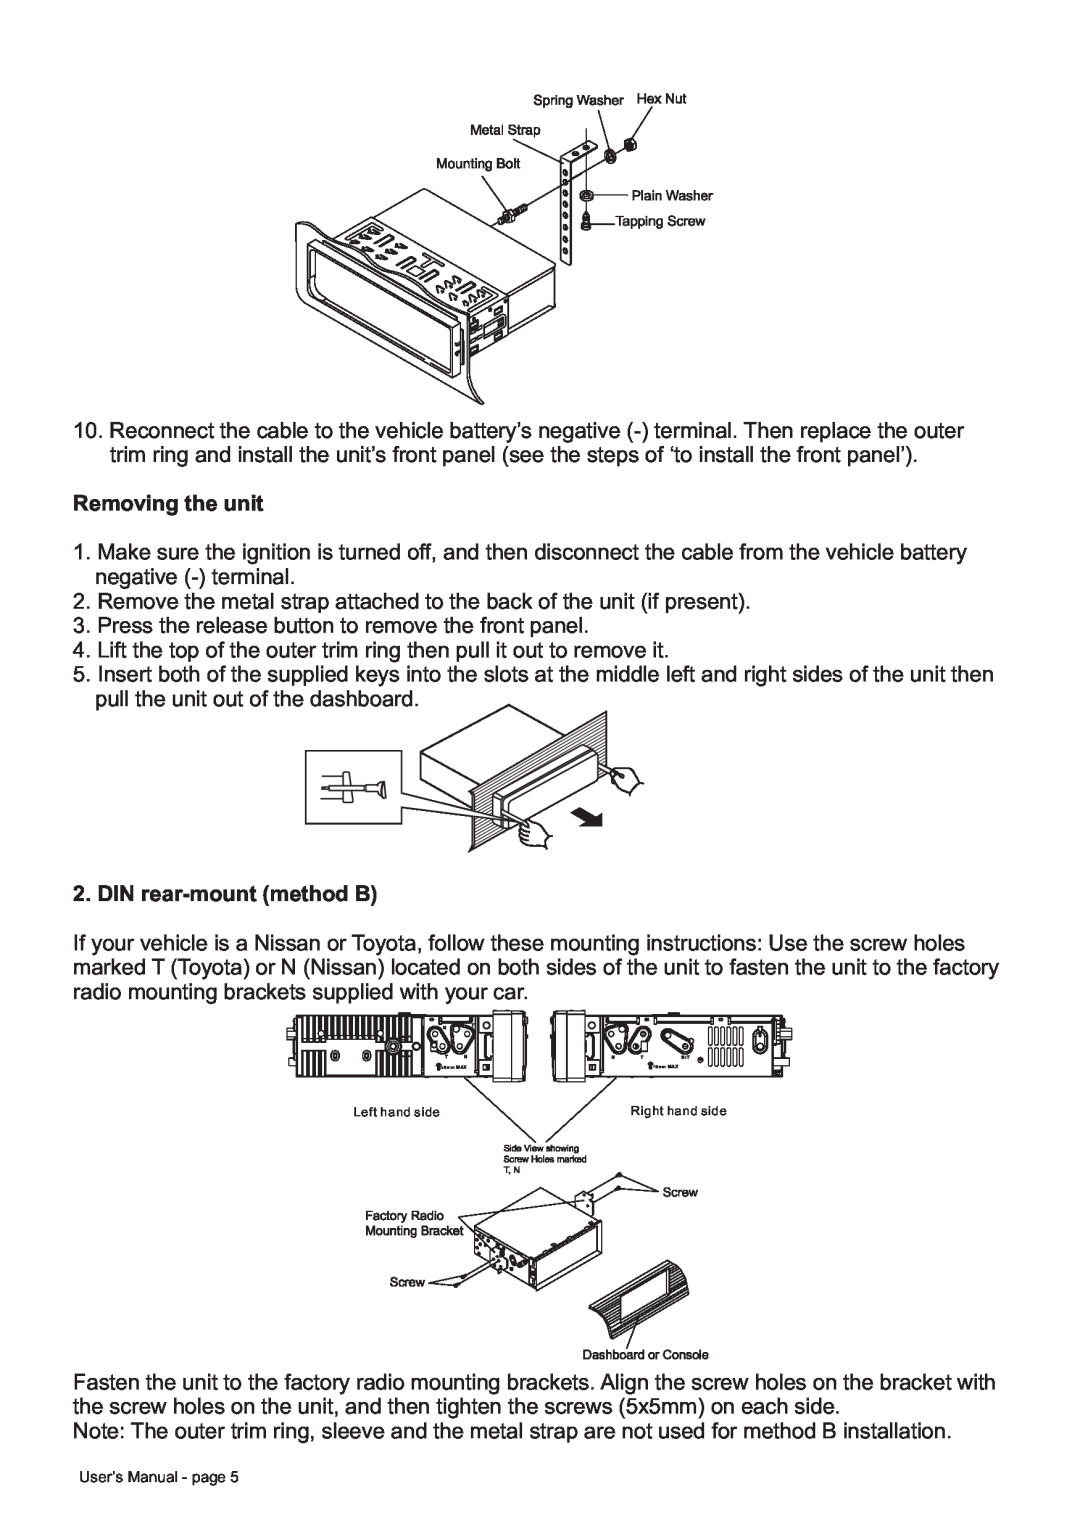 Boss Audio Systems BV8728B manual Removing the unit, DIN rear-mount method B 